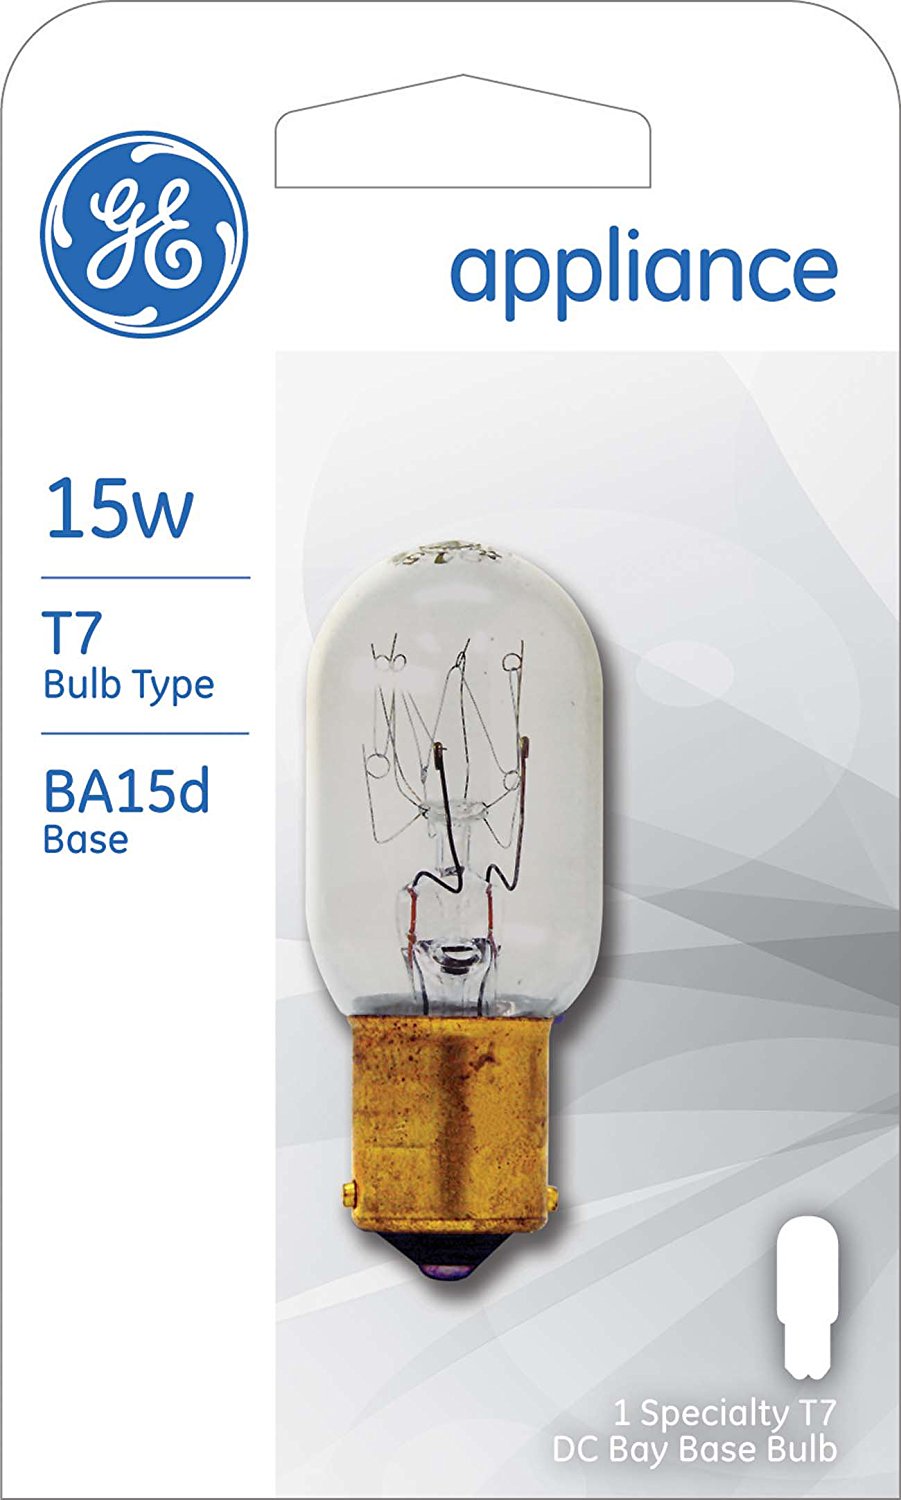 GE 35154 Double Contact Bayonet Base T7 Appliance Light Bulb, Clear, 15W, 120V